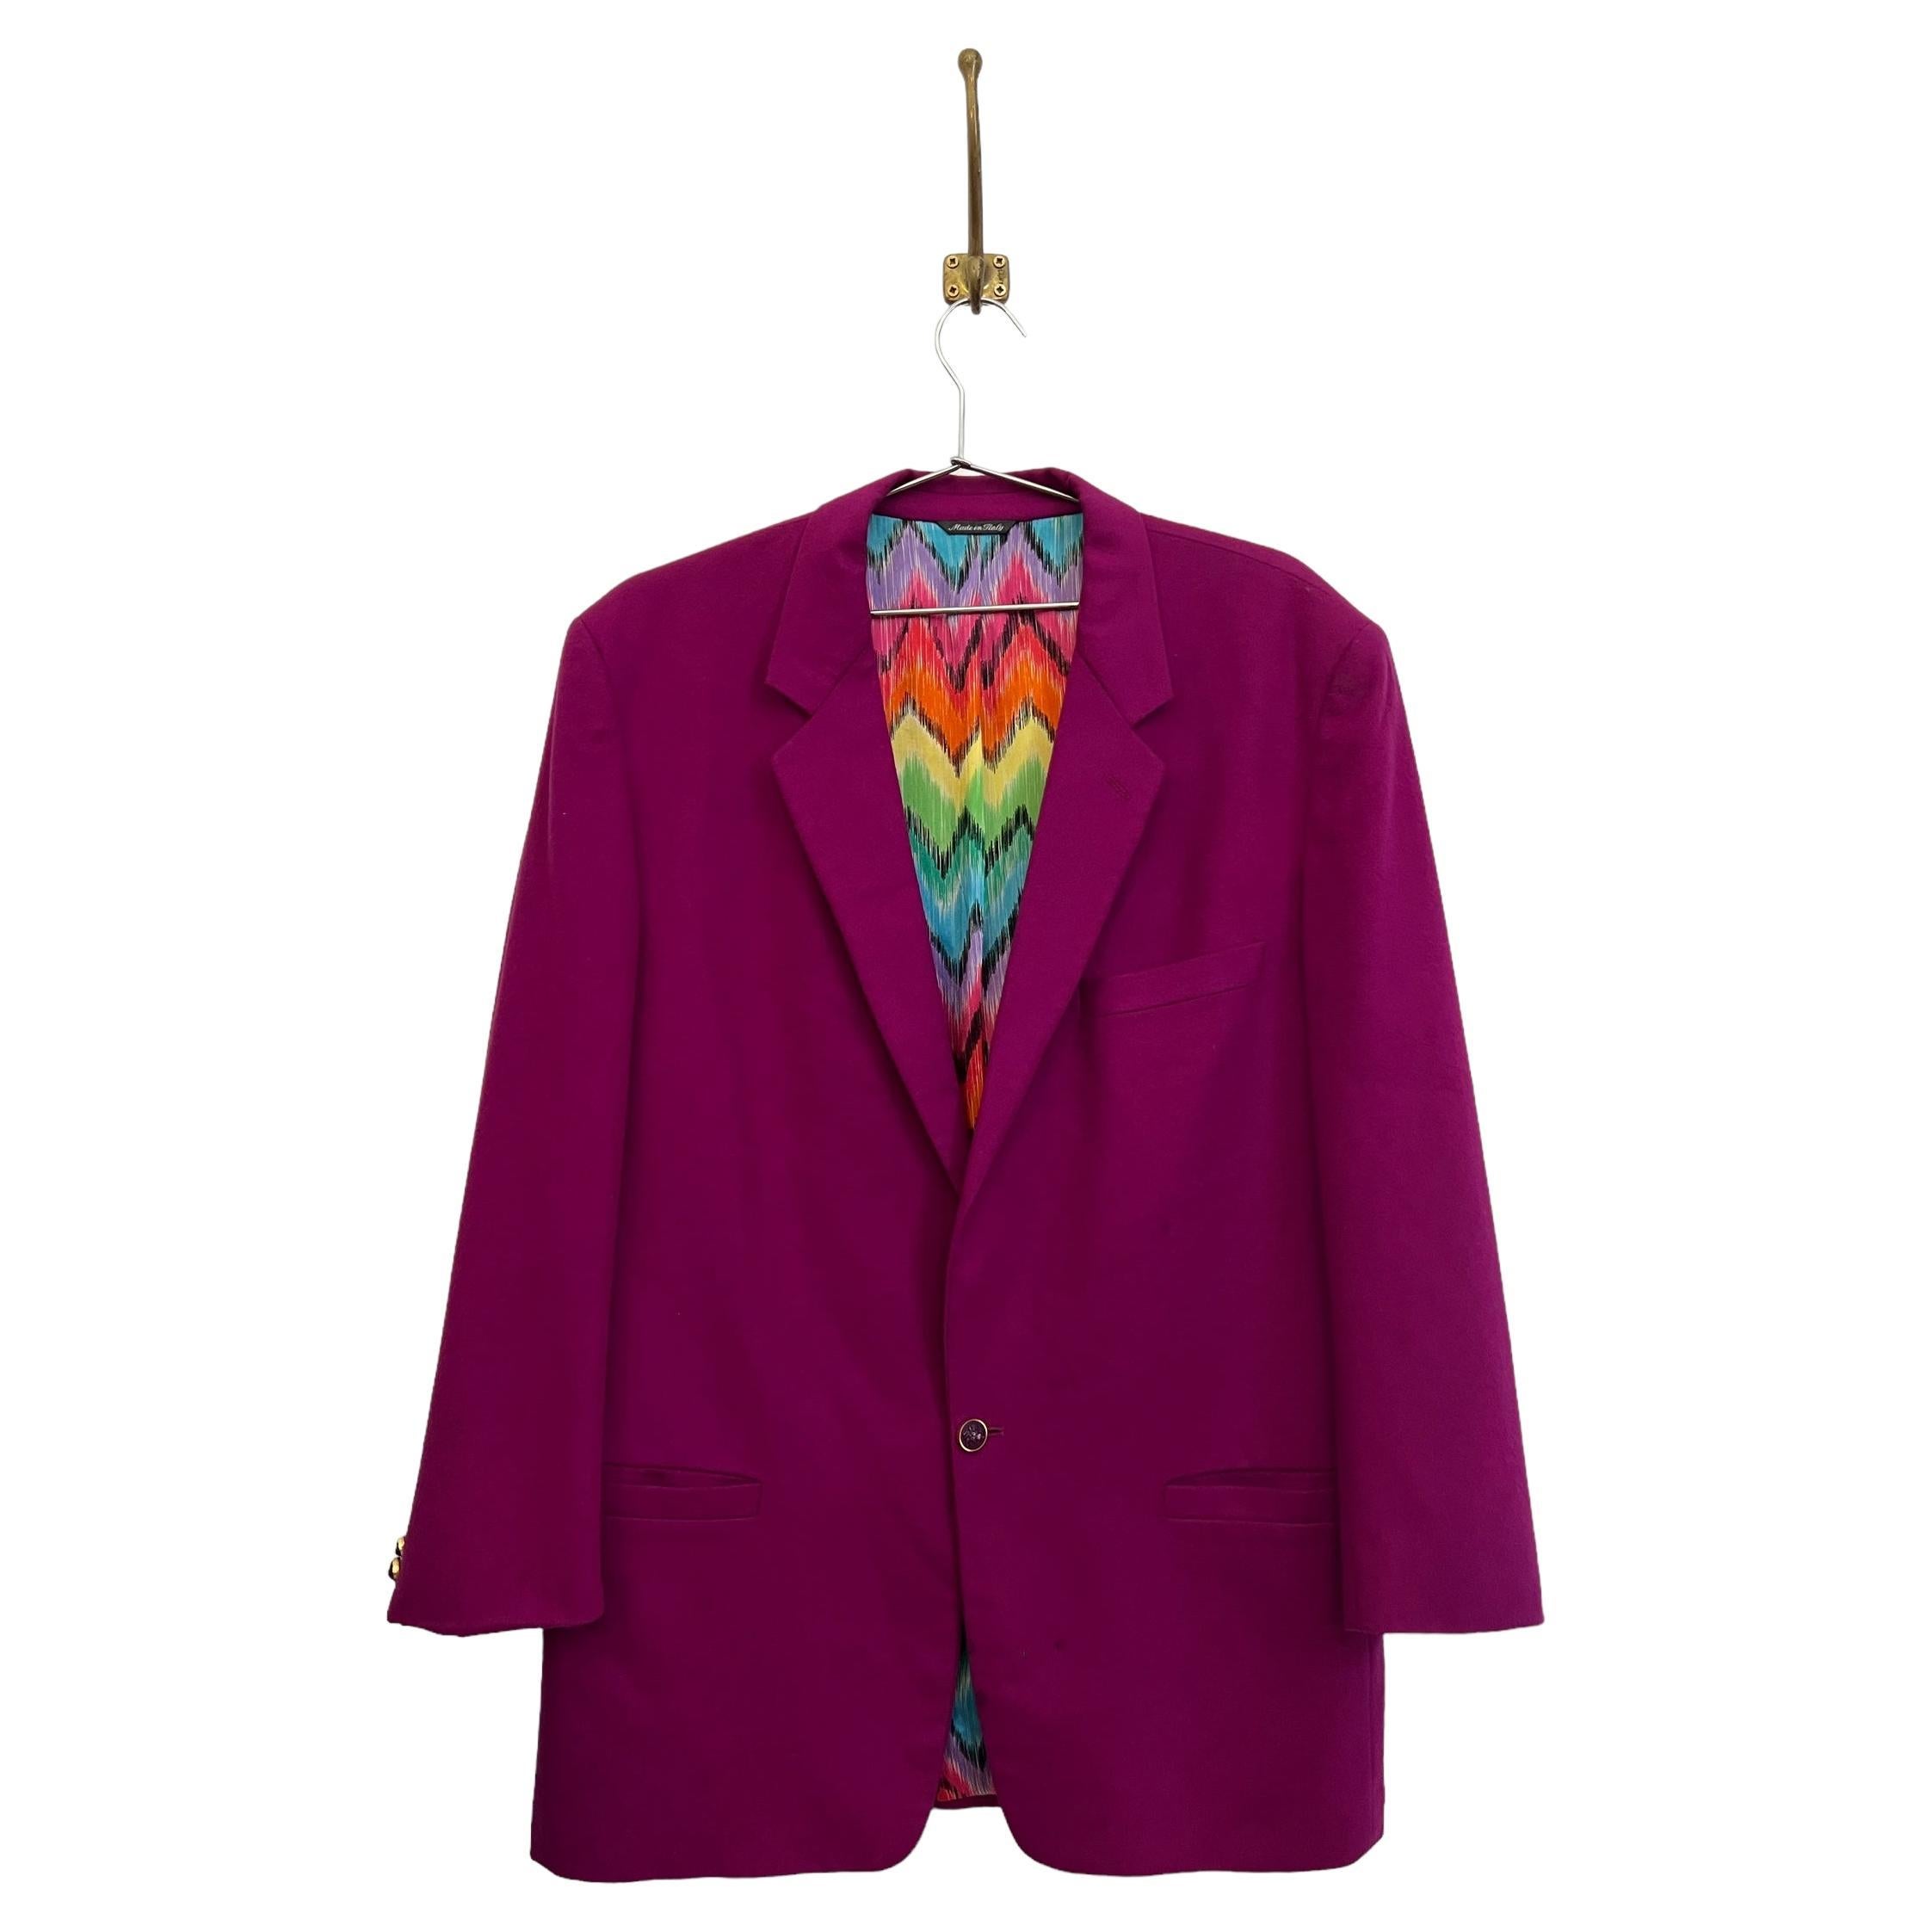 Versus by Gianni Versace Magenta Pink Rainbow Lined Cashmere Blazer Suit Jacket